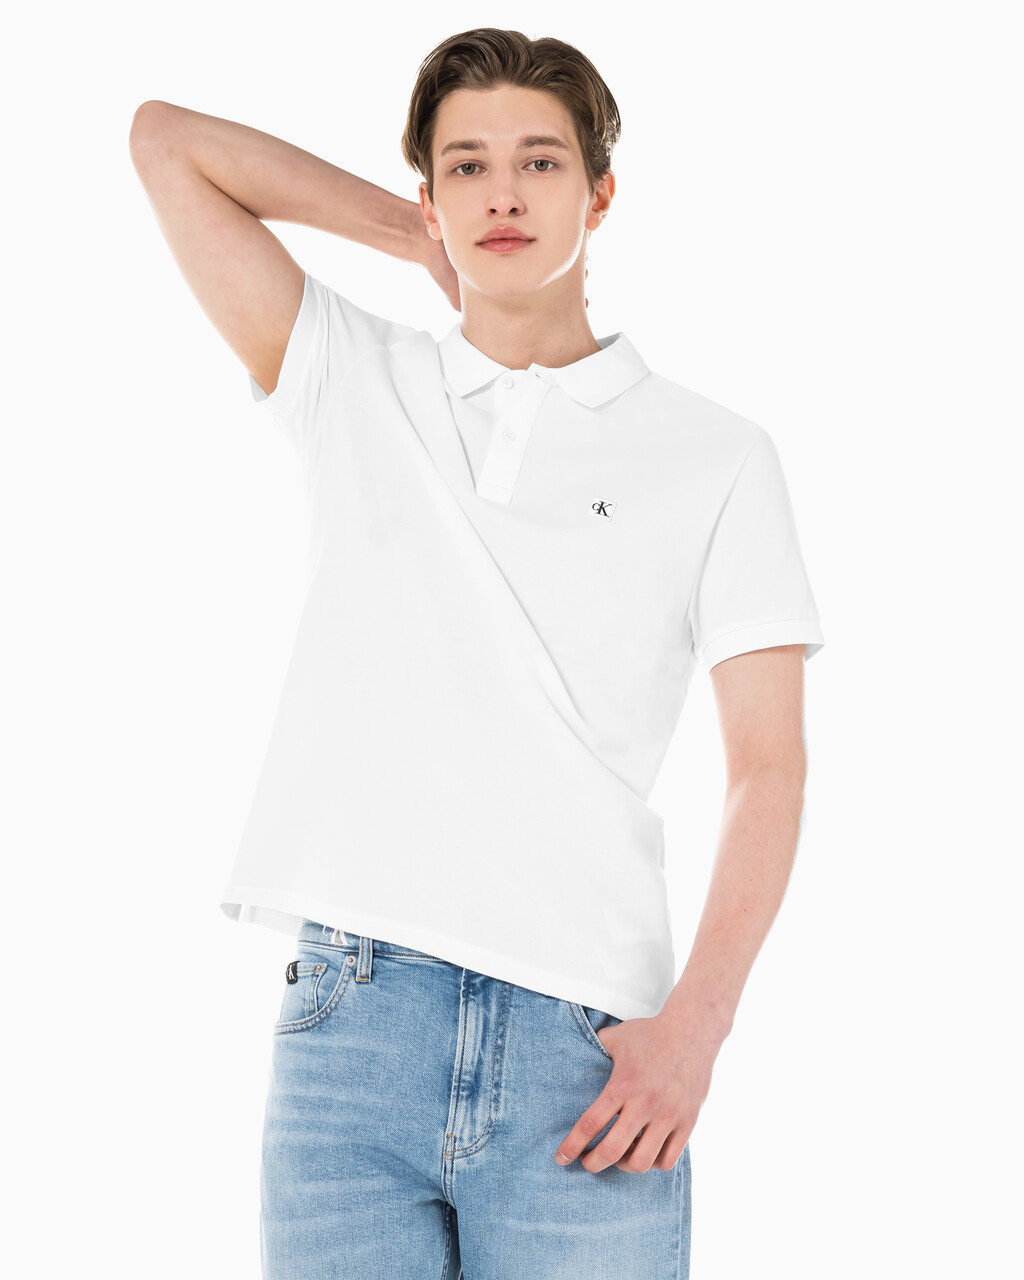 Buy 남성 슬림핏 CK 뱃지 로고 반팔 폴로 티셔츠 in color BRIGHT WHITE